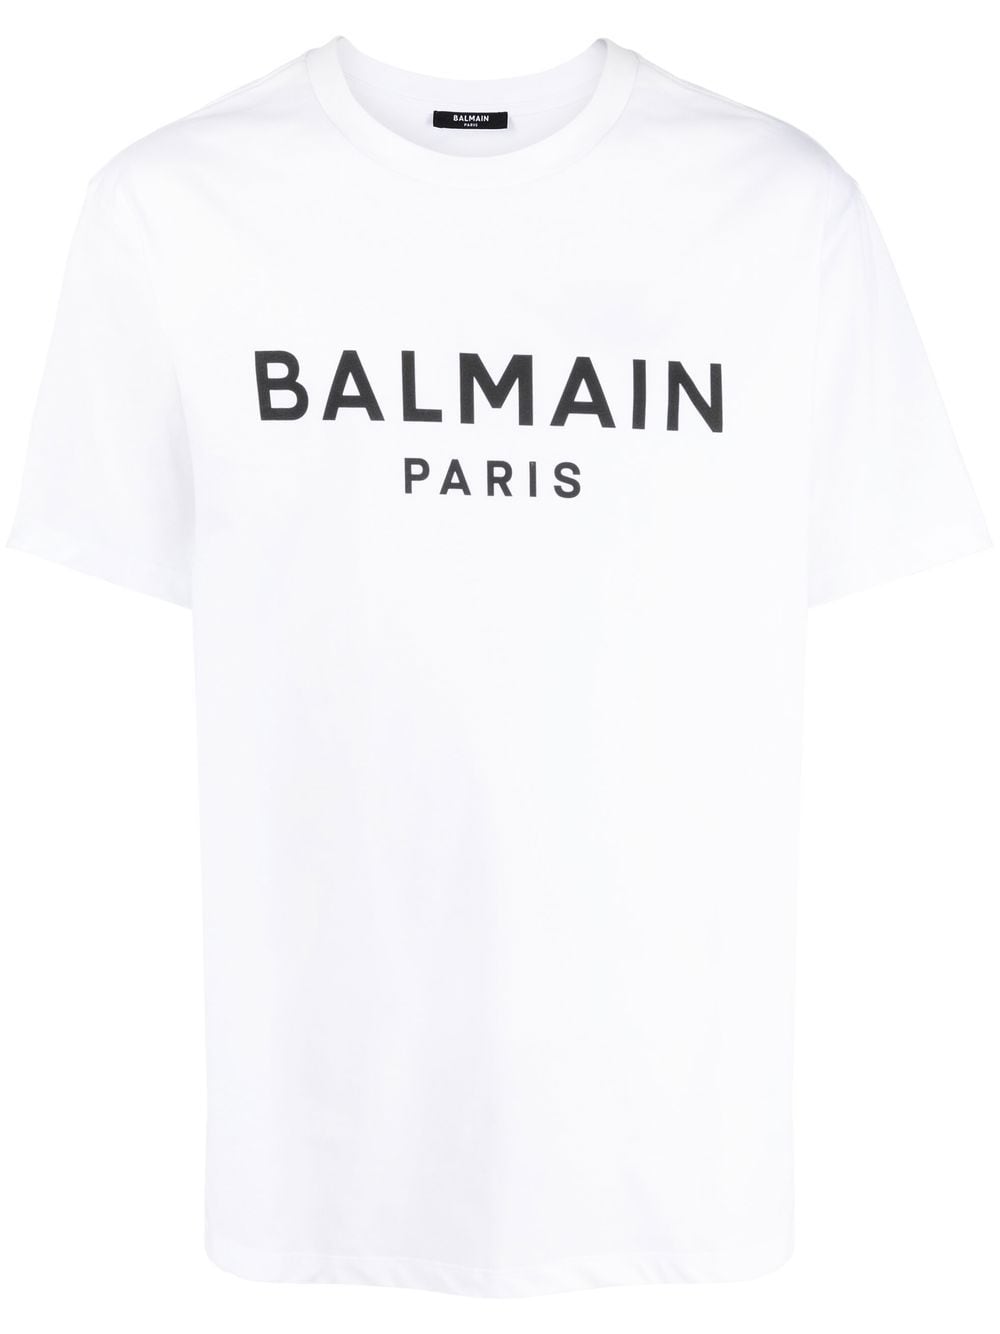 BalmainClassic t-shirt at Fashion Clinic